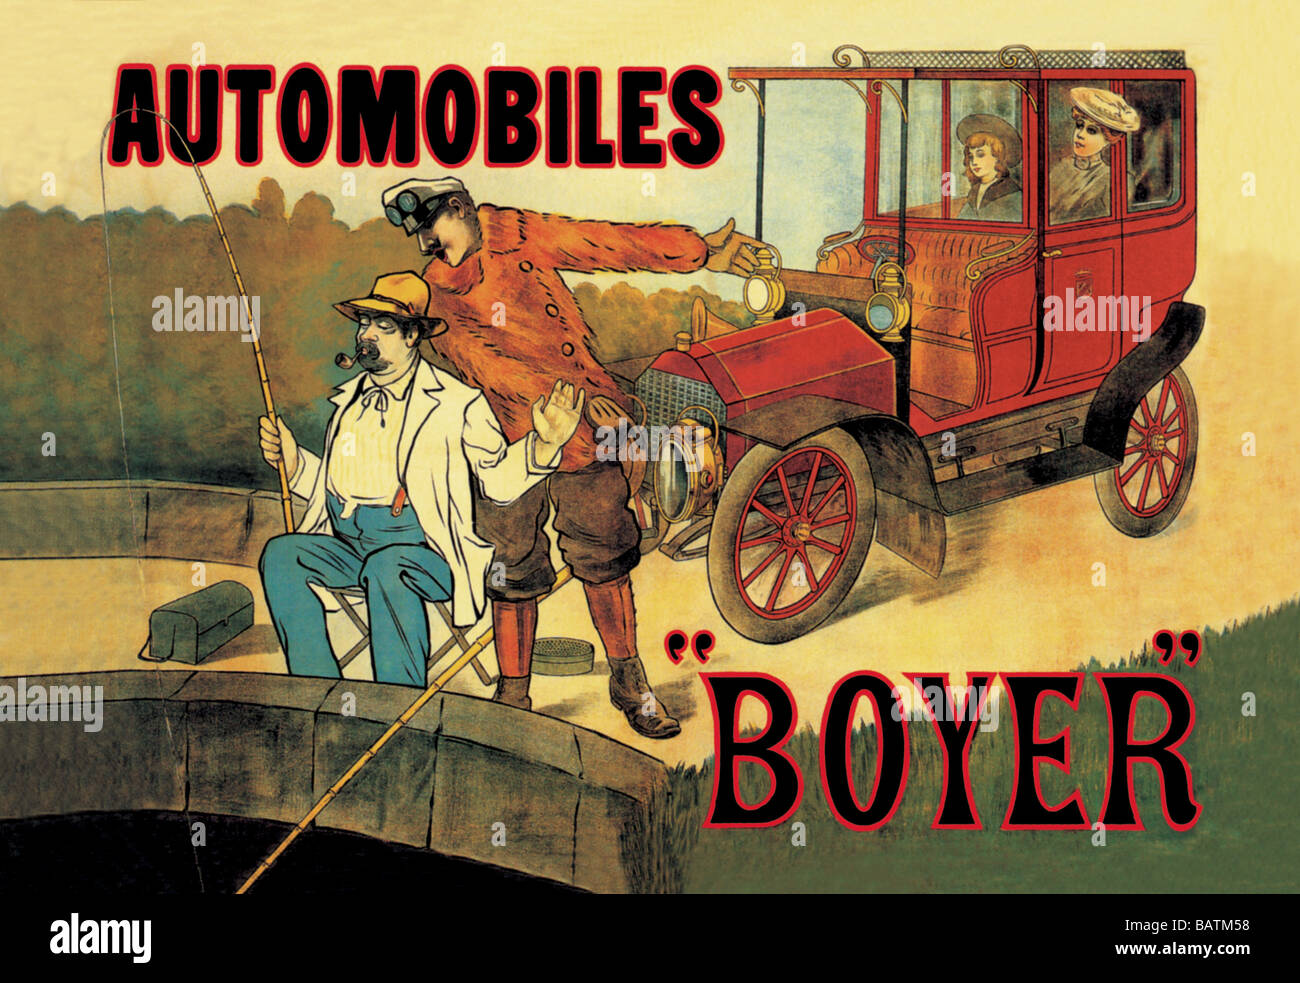 Boyer - Automobiles Stock Photo